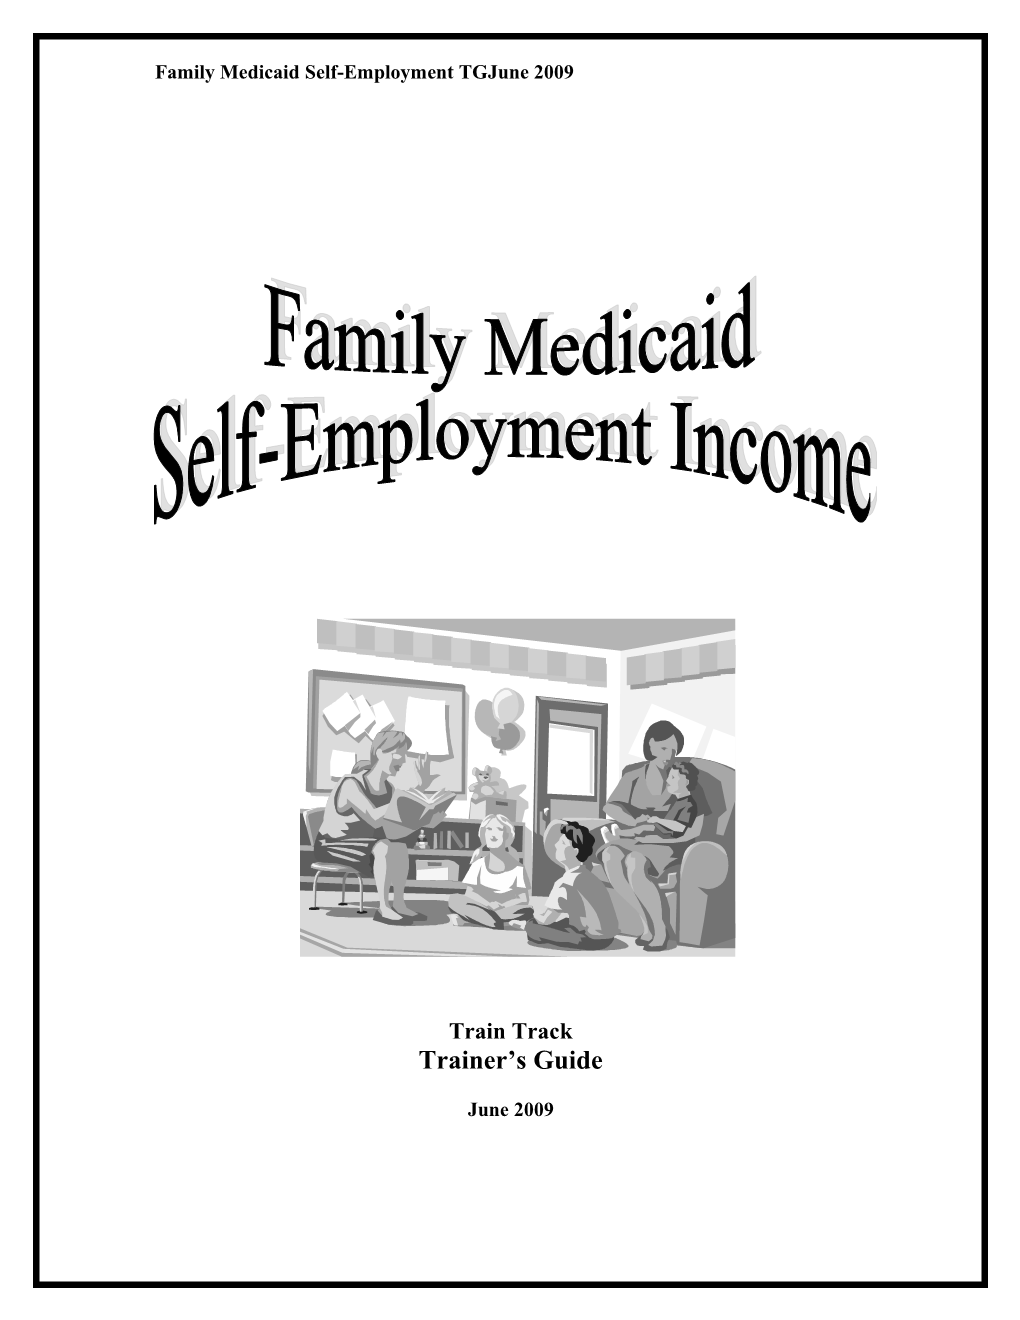 Family Medicaid Self-Employment TG June 2009